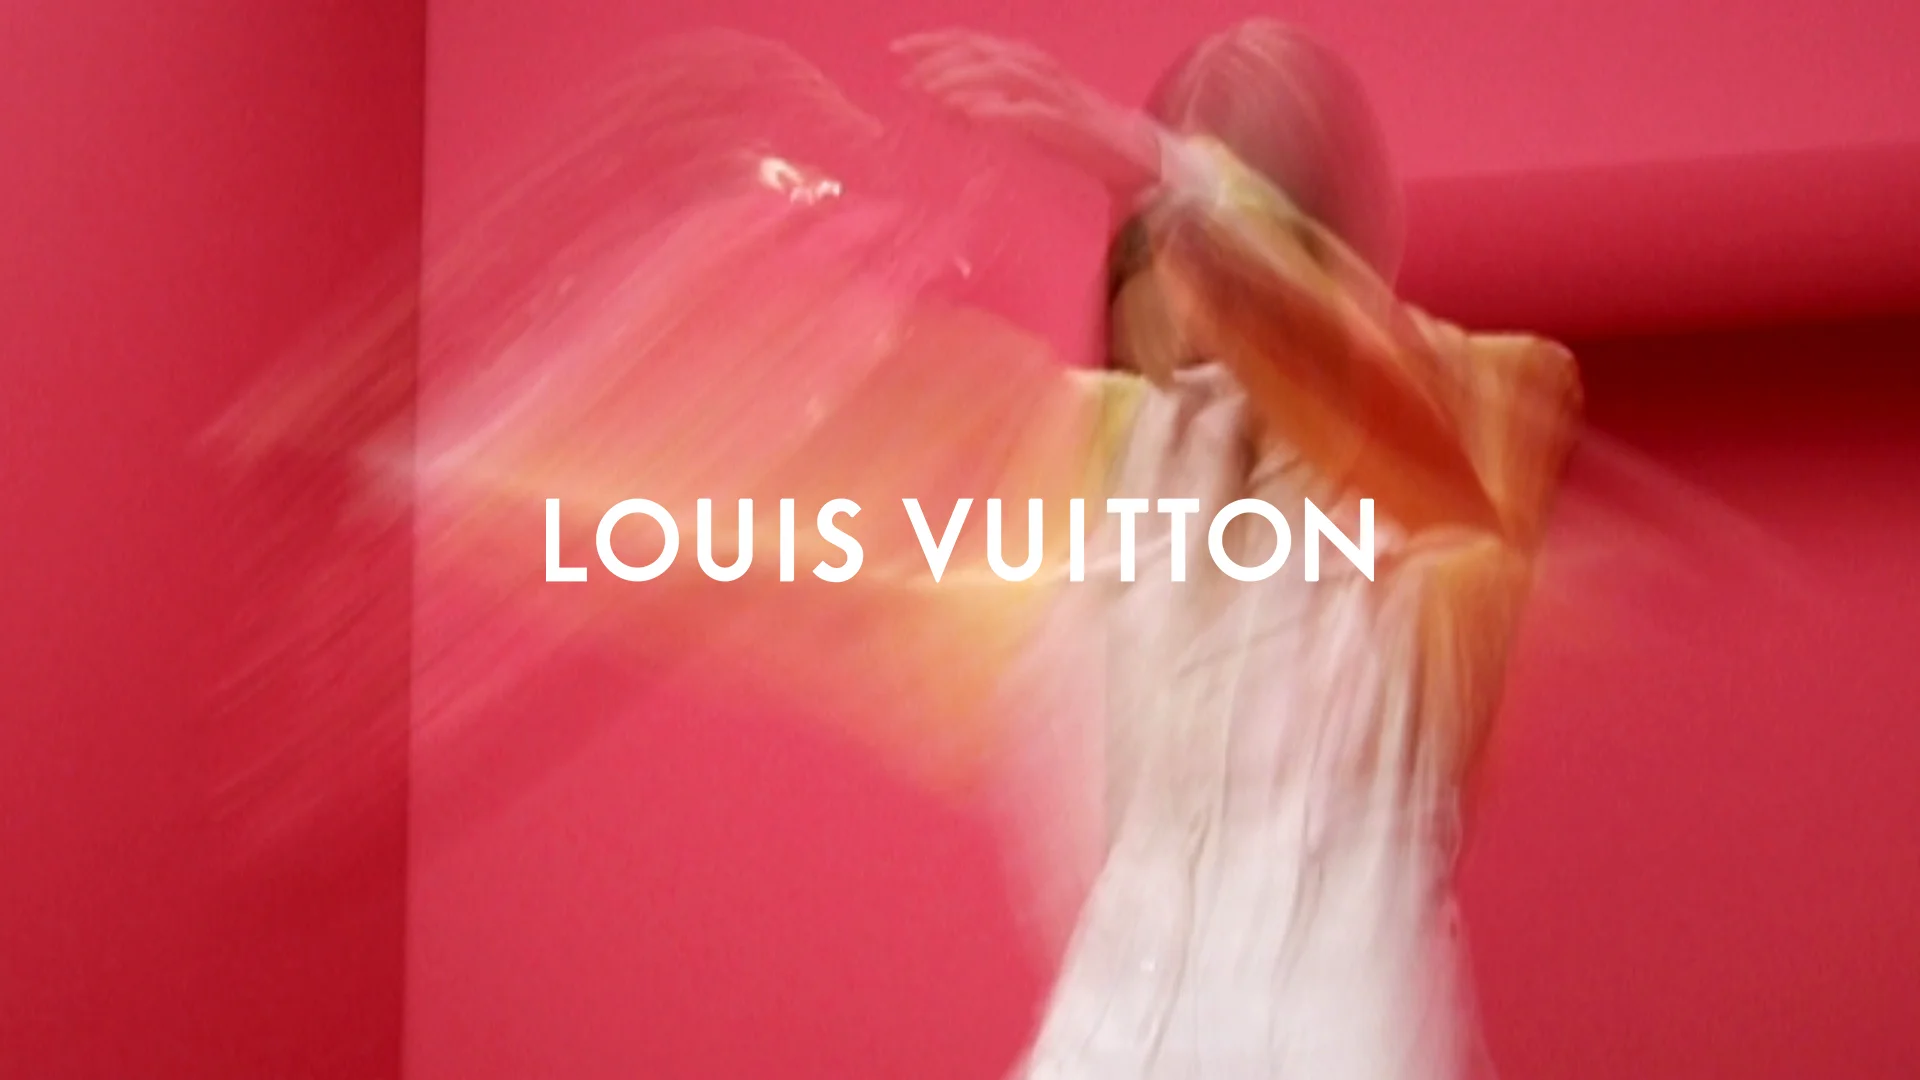 LOUIS VUITTON  Bubblegram Collection on Vimeo